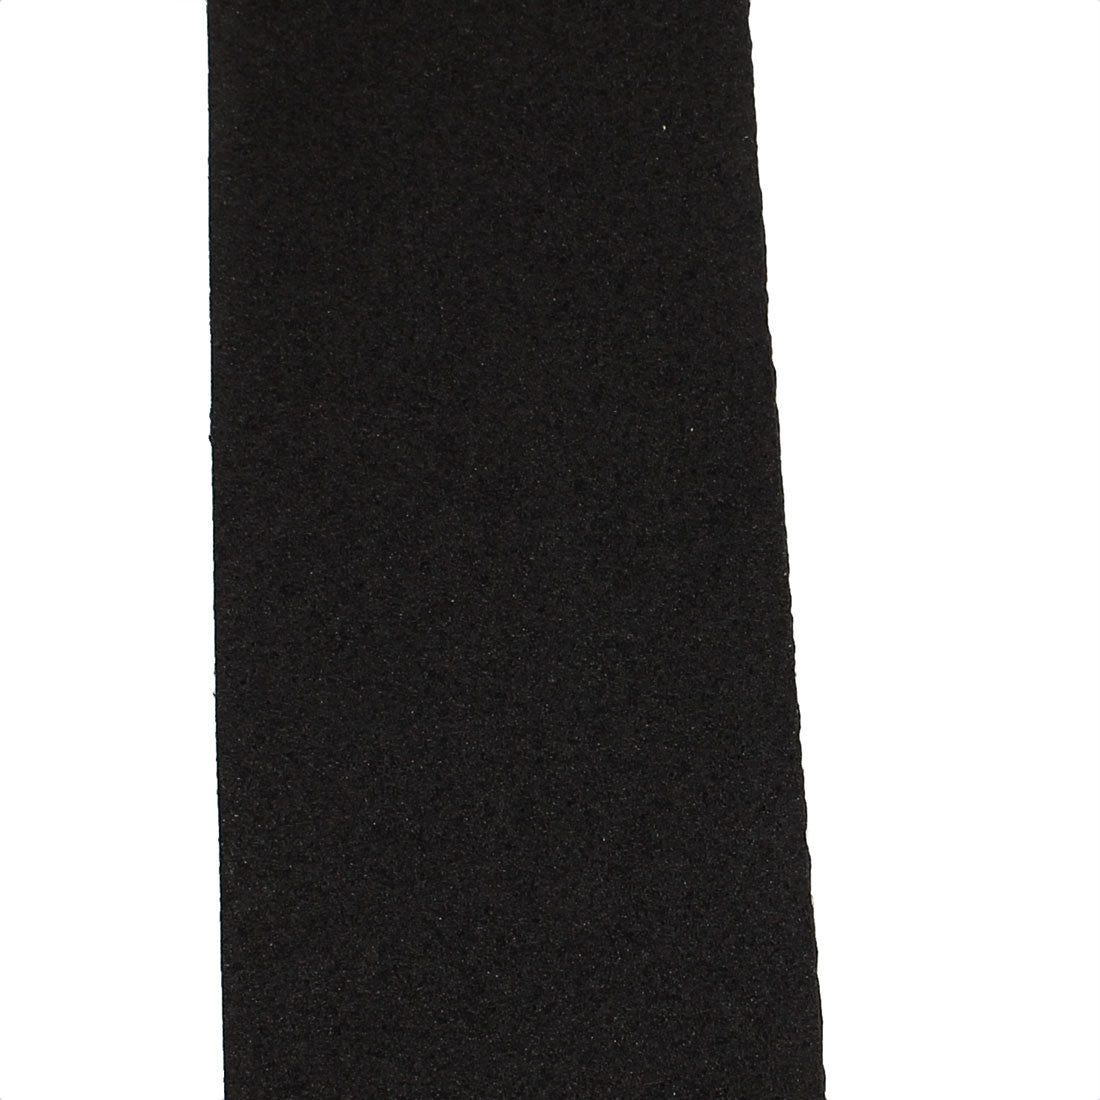 uxcell Uxcell 35mm Width 3mm Thickness Single Side Sponge Foam Tape Black 5 Meter Length